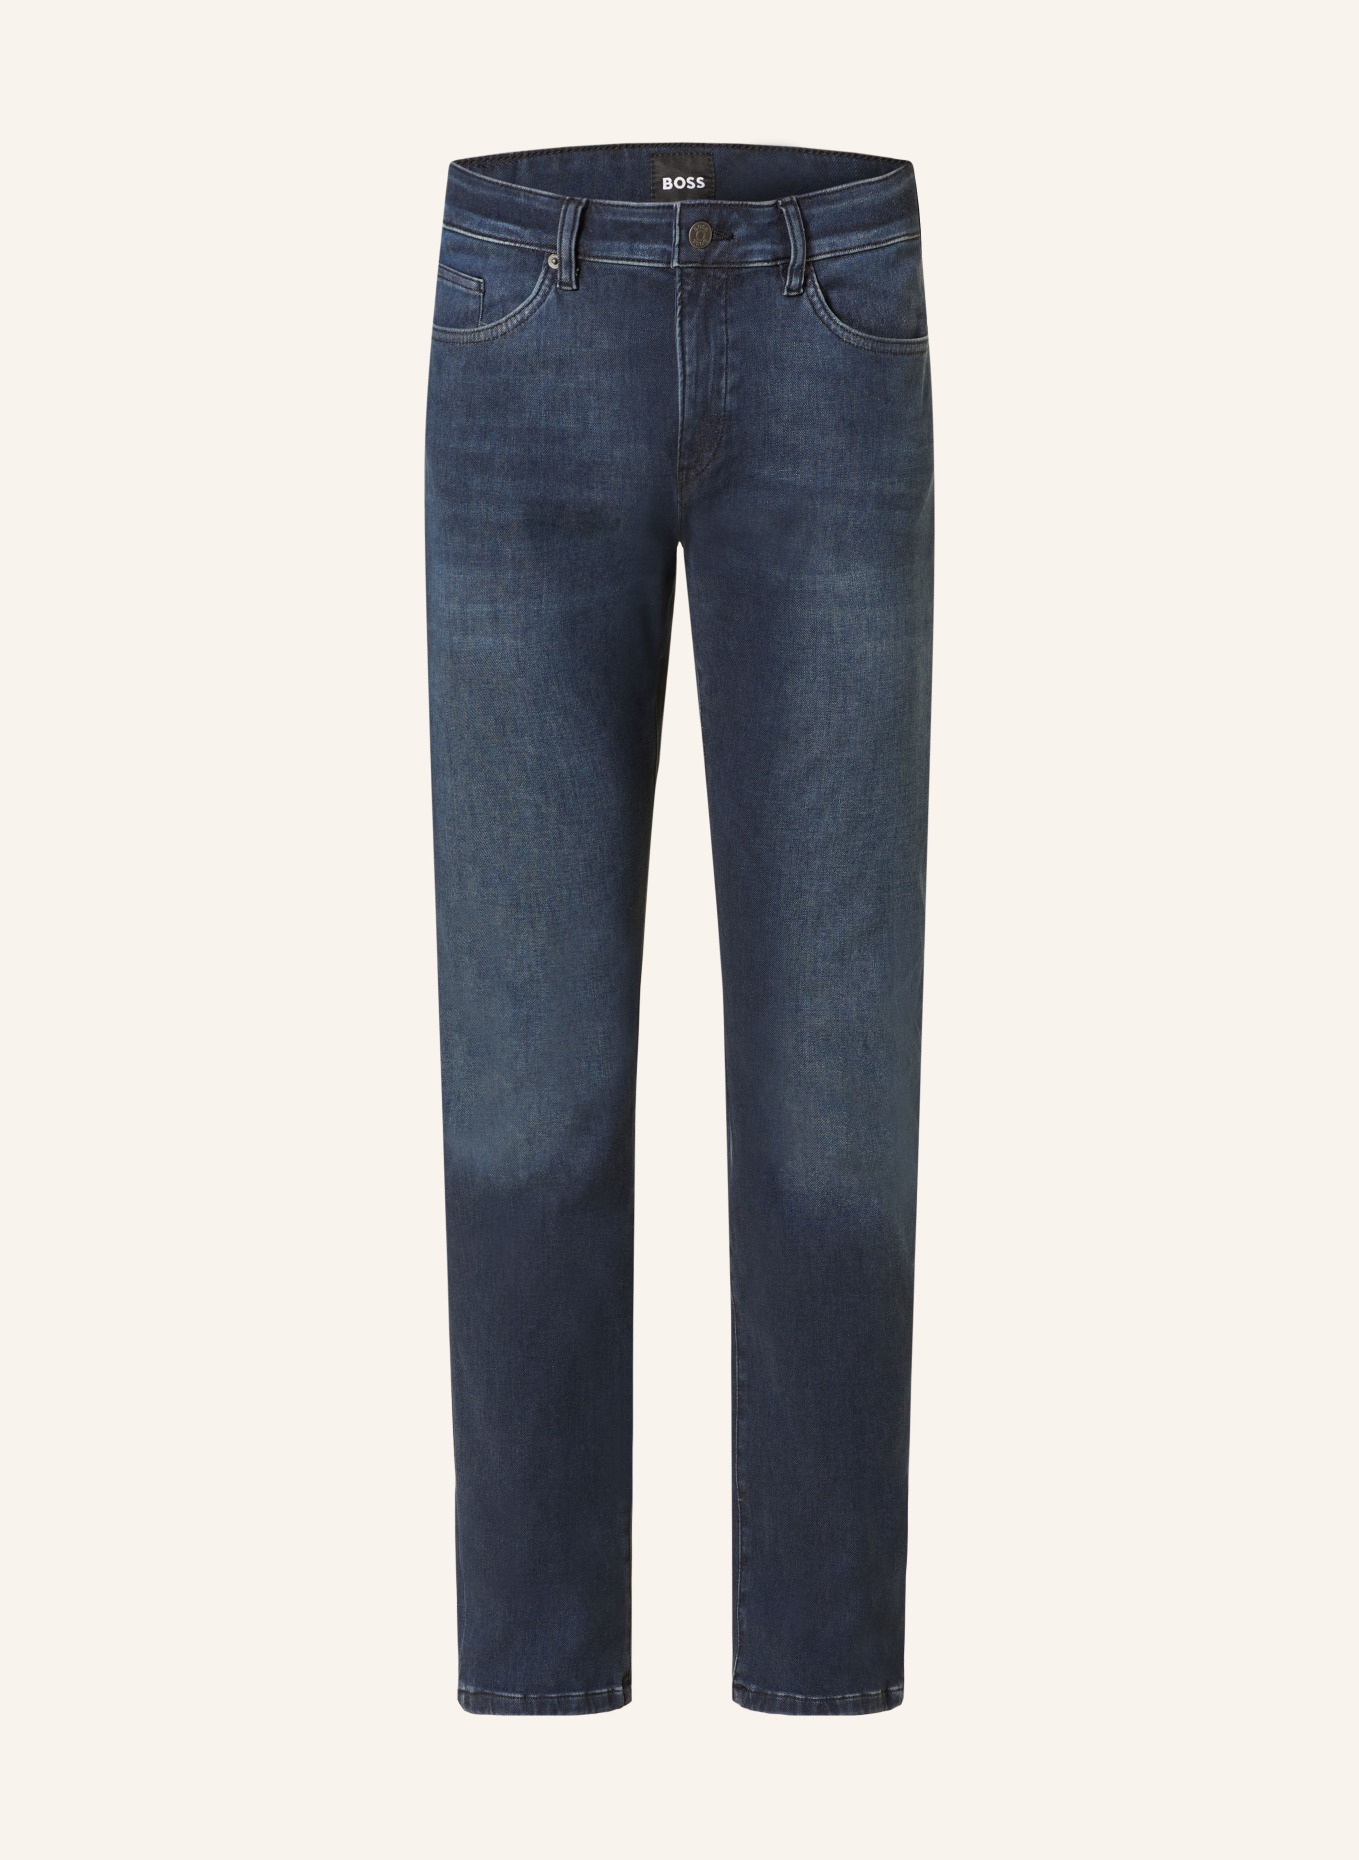 BOSS Jeans DELAWARE Slim Fit, Farbe: 421 MEDIUM BLUE (Bild 1)